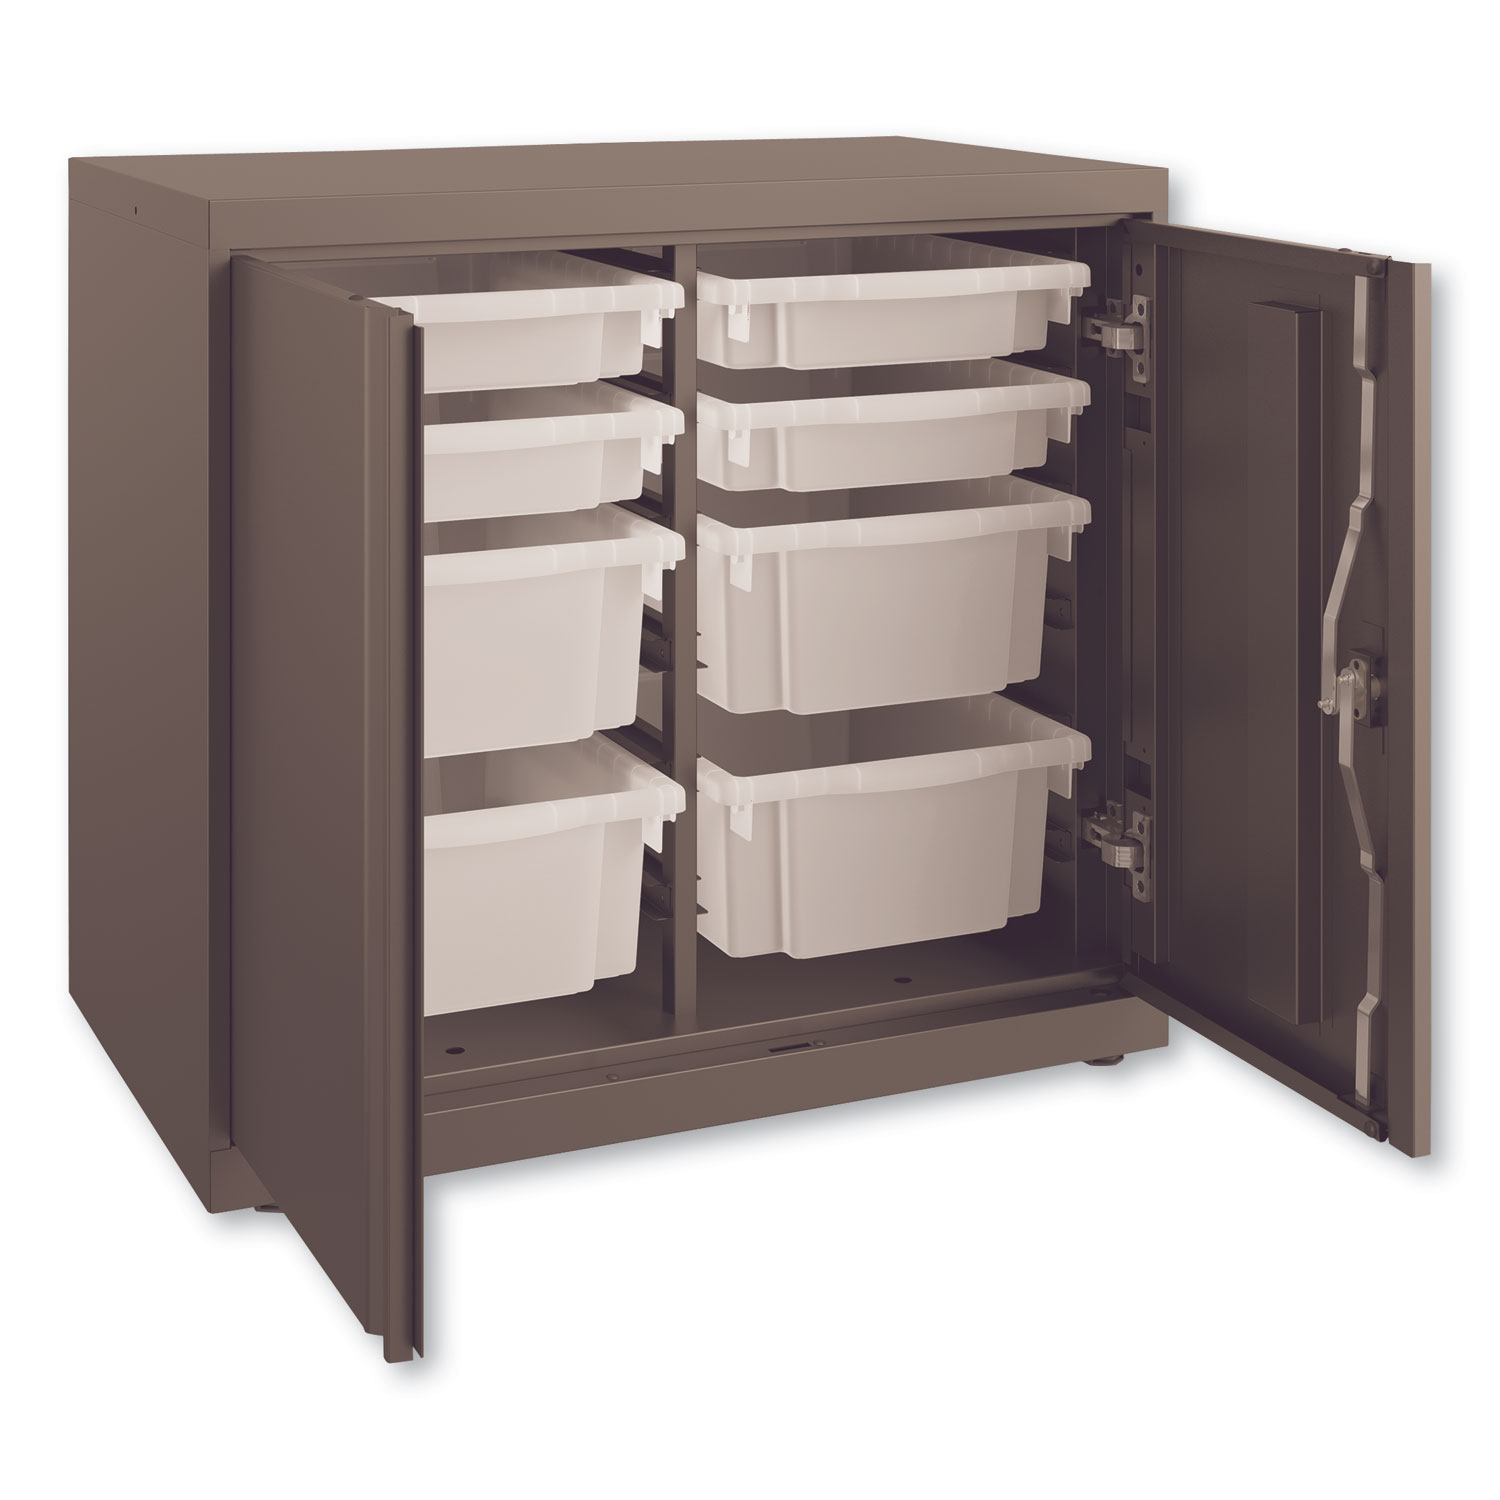  HON HONSC182830LGS Flagship Storage Cabinet with 4 Small and 4 Medium Bins, 30 x 18 x 28, Charcoal (HONSC182830LGS) 